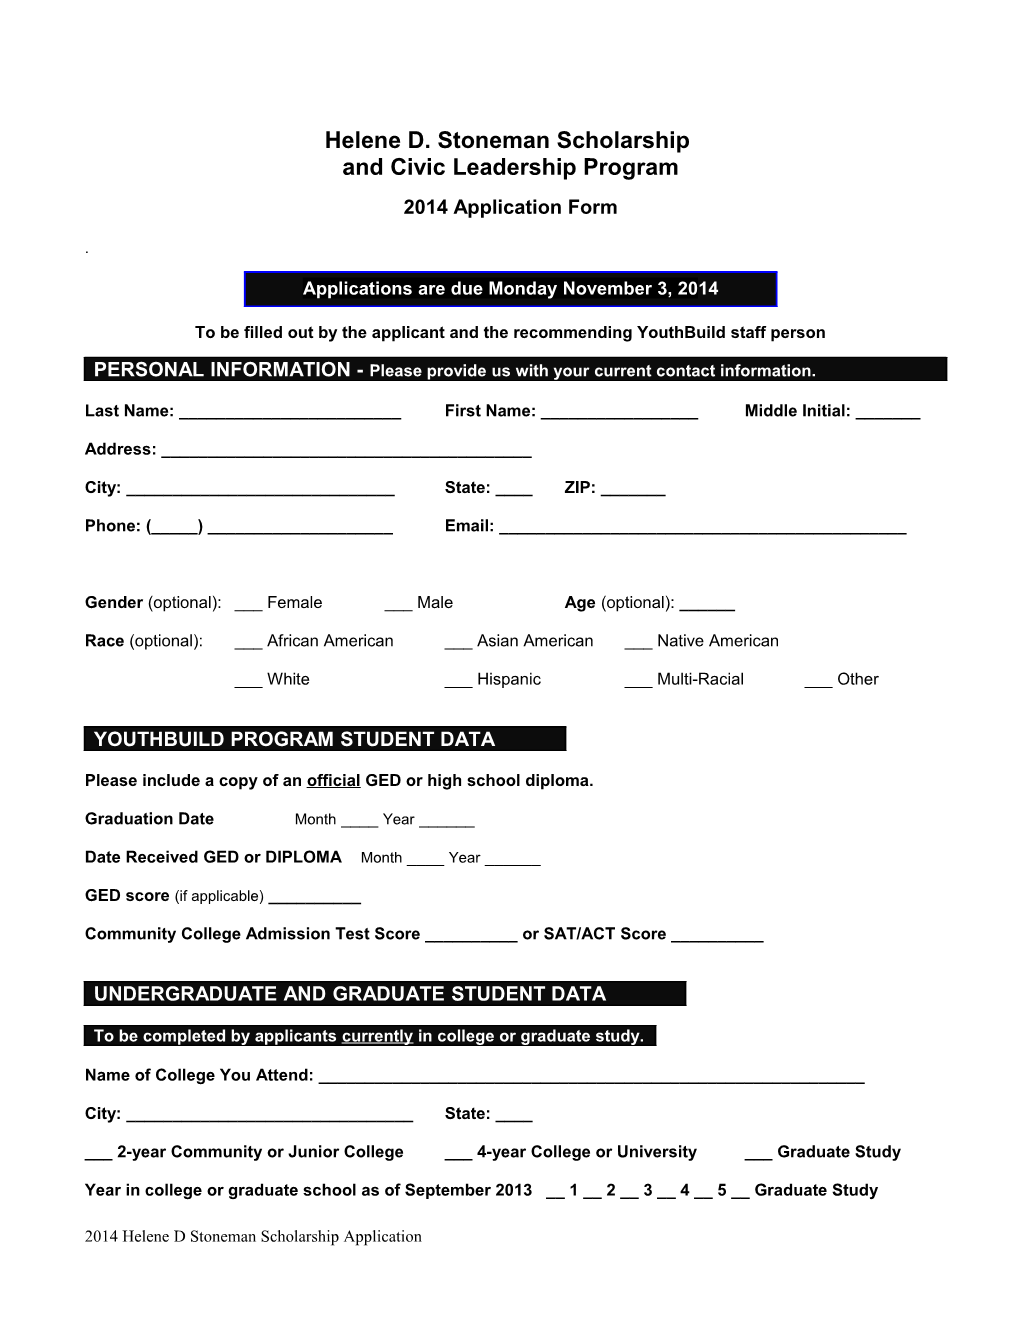 Application for Elinor Shaffer Scholarship for Youthbuild Graduates